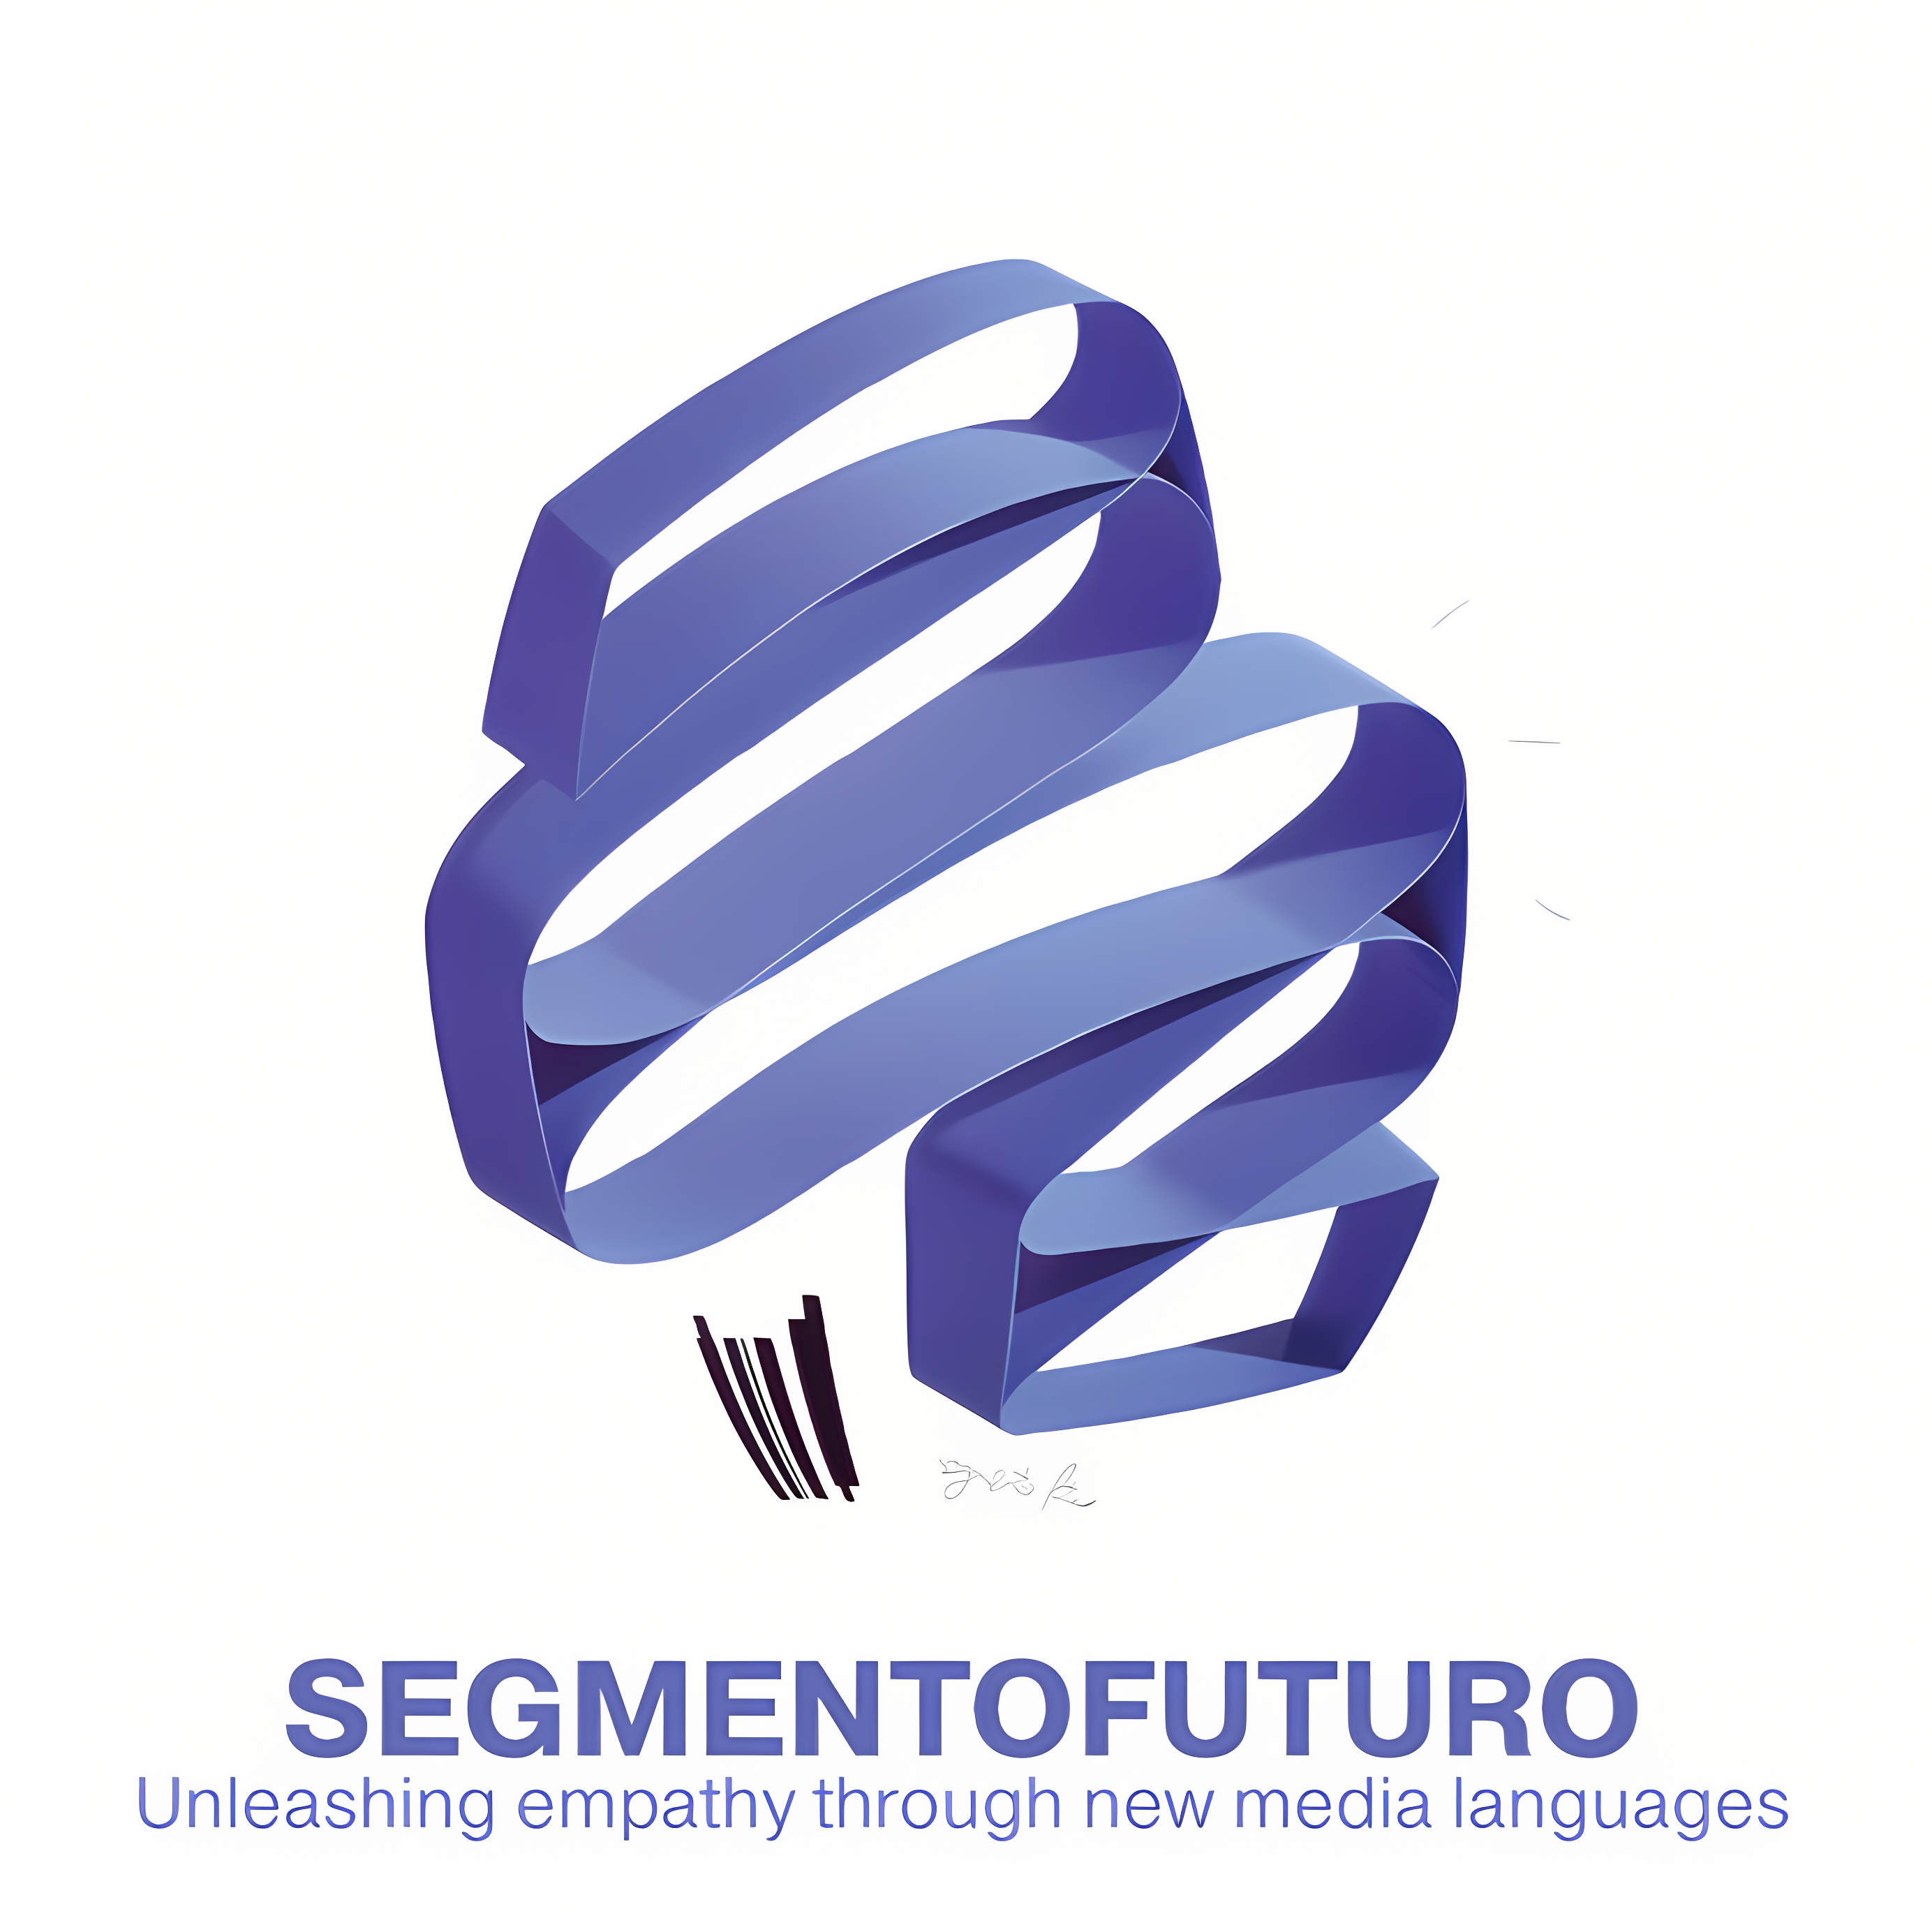 Segmento Futuro - new creative languages